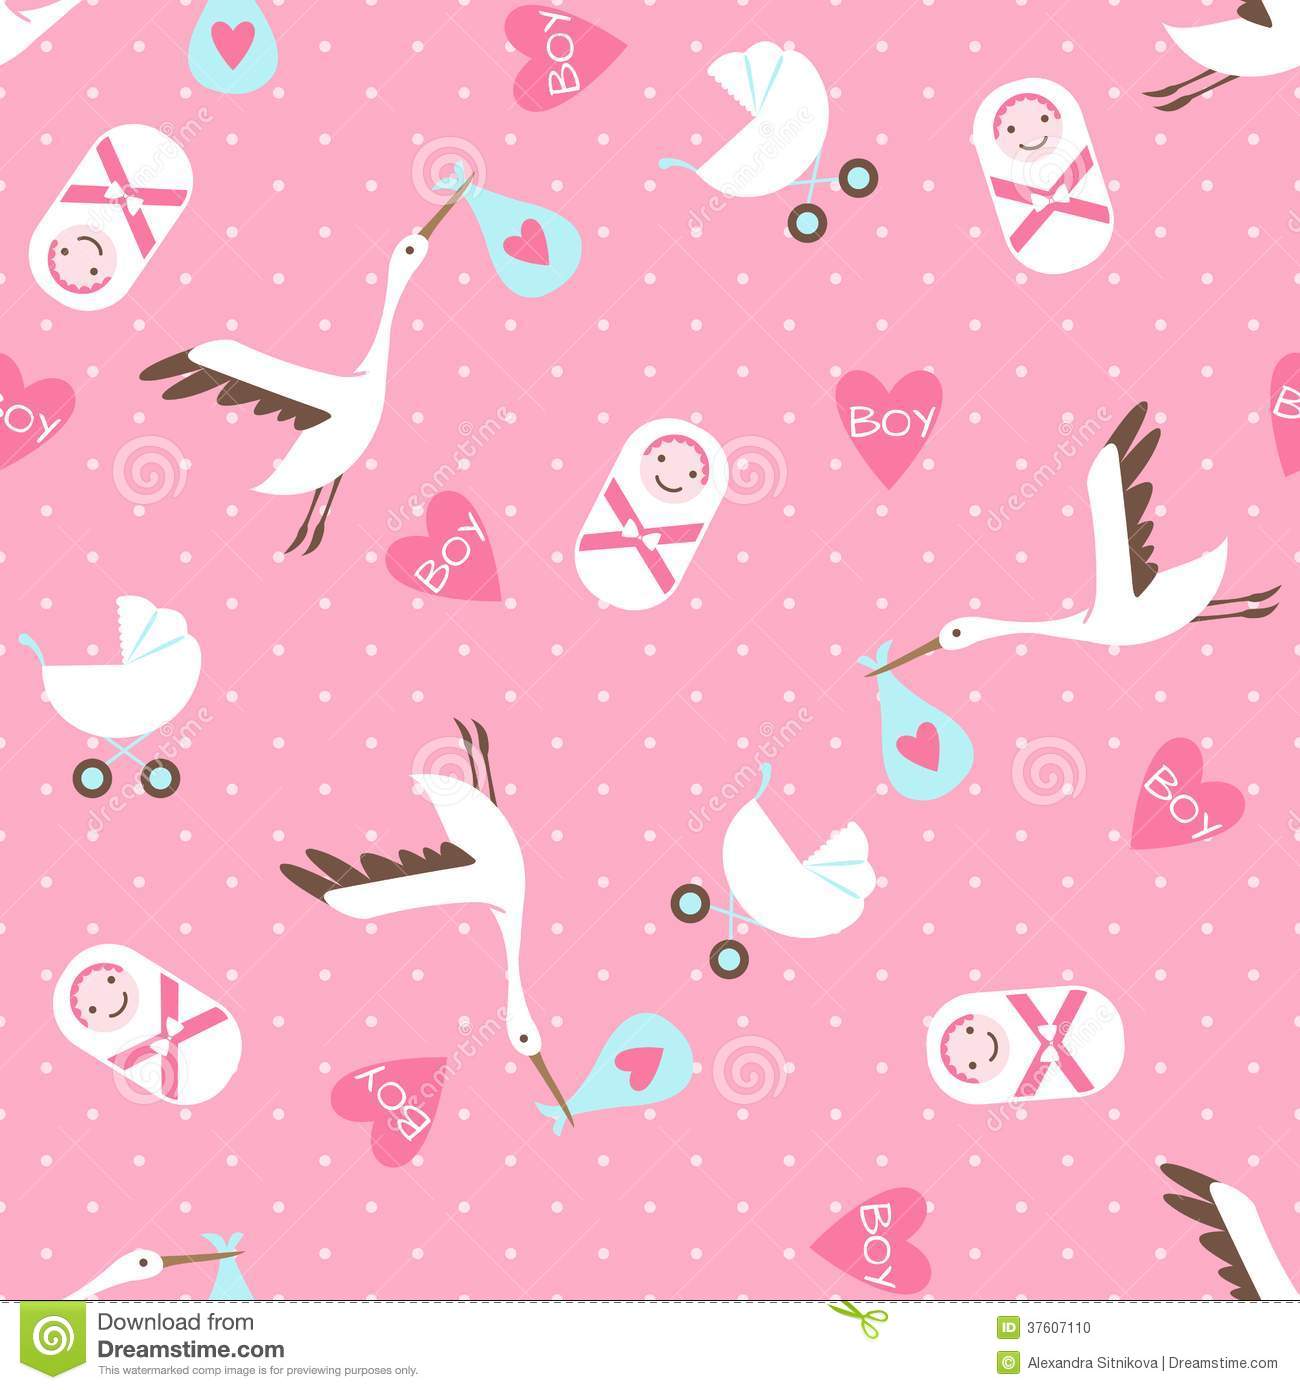 Baby Shower Wallpaper   Desktop Backgrounds